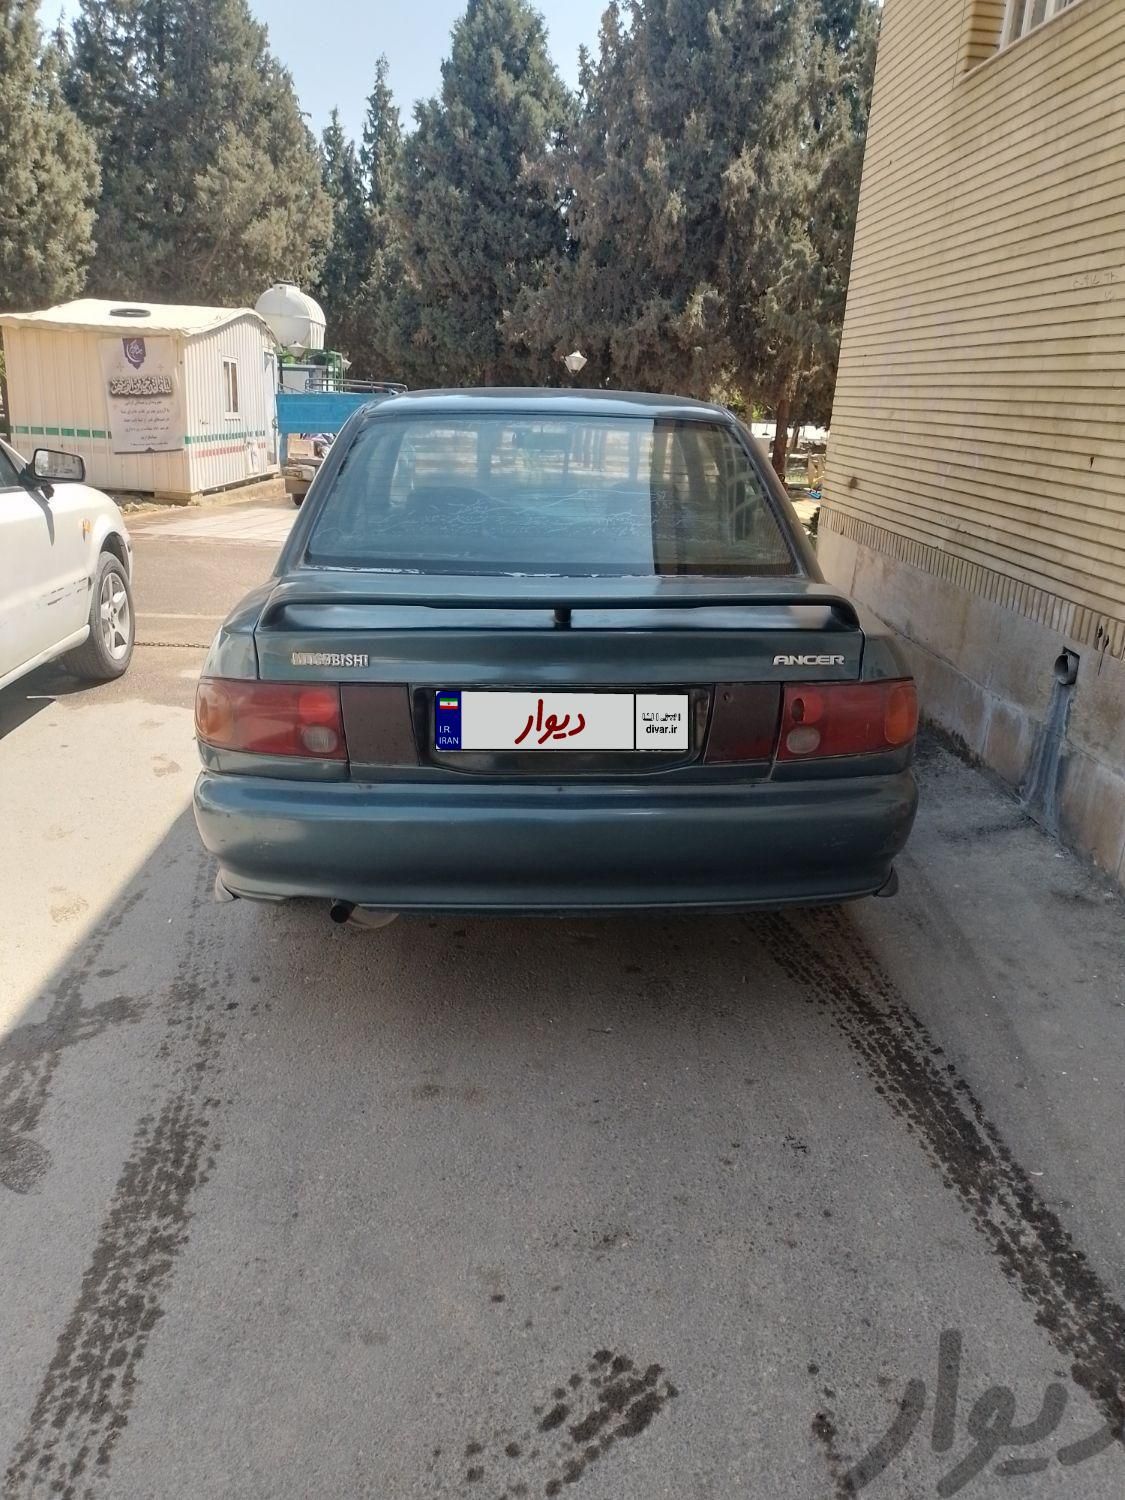 میتسوبیشی لنسر مدل ۱۹۹۳|خودروی کلاسیک|شیراز, شهرک امیر کبیر|دیوار